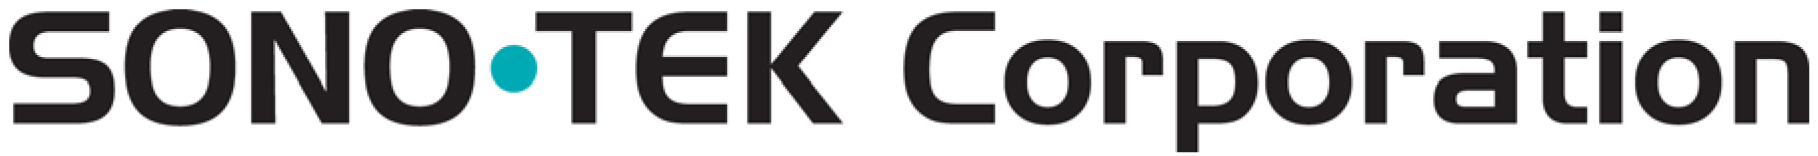 Sono-Tek Corporation